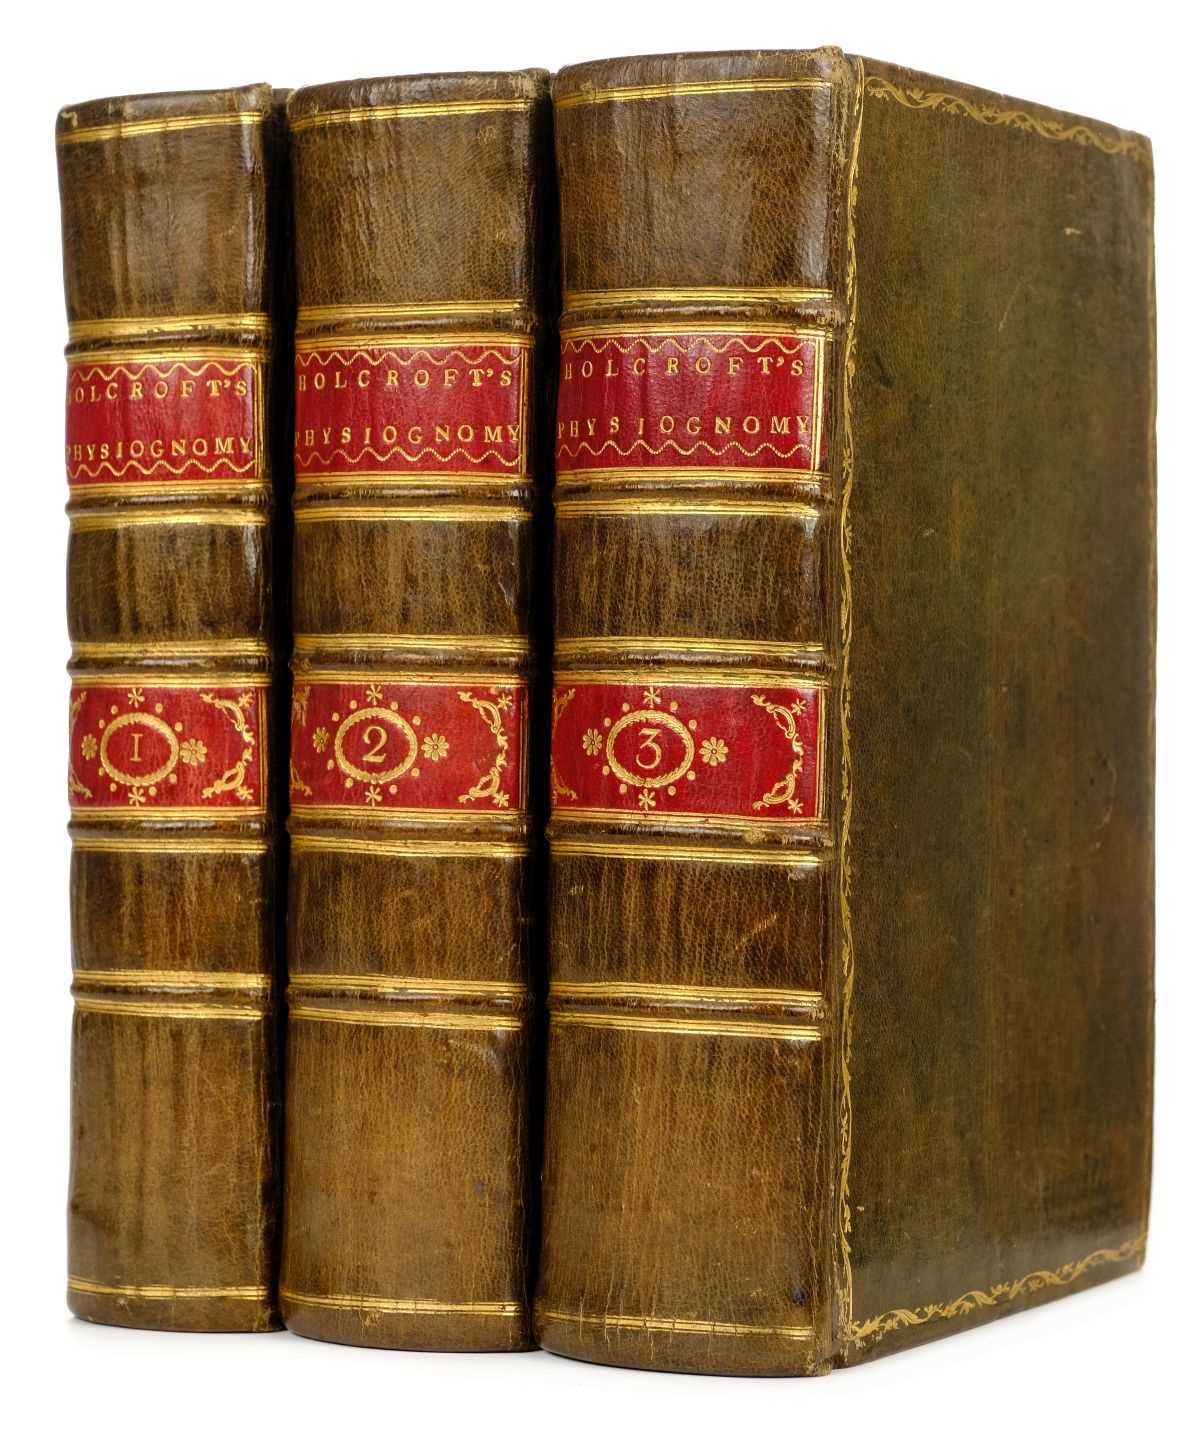 Lot 296 - Lavater (Johann Caspar). Essays on Physiognomy, green morocco binding, 1789